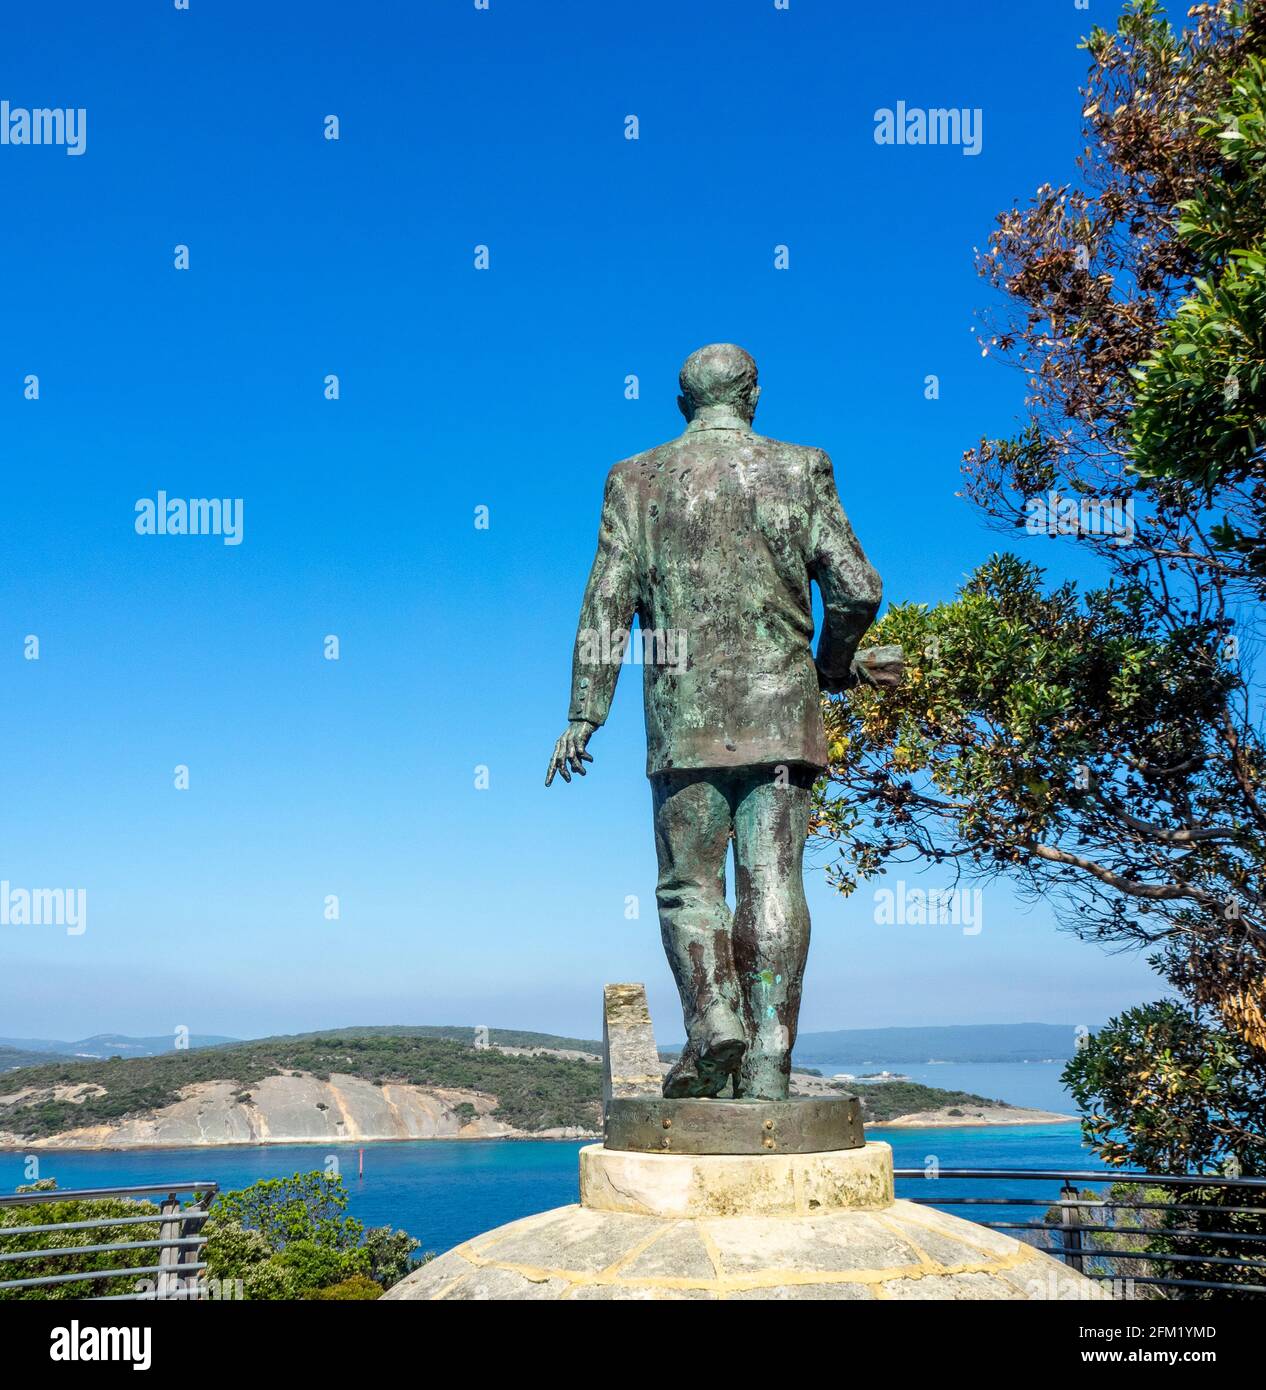 WW1 Anzac monument bronze statue of Mustafa Kemal Ataturk by Burhan Alkar sculptor artist overlooking King George Sound Albany Western Australia. Stock Photo